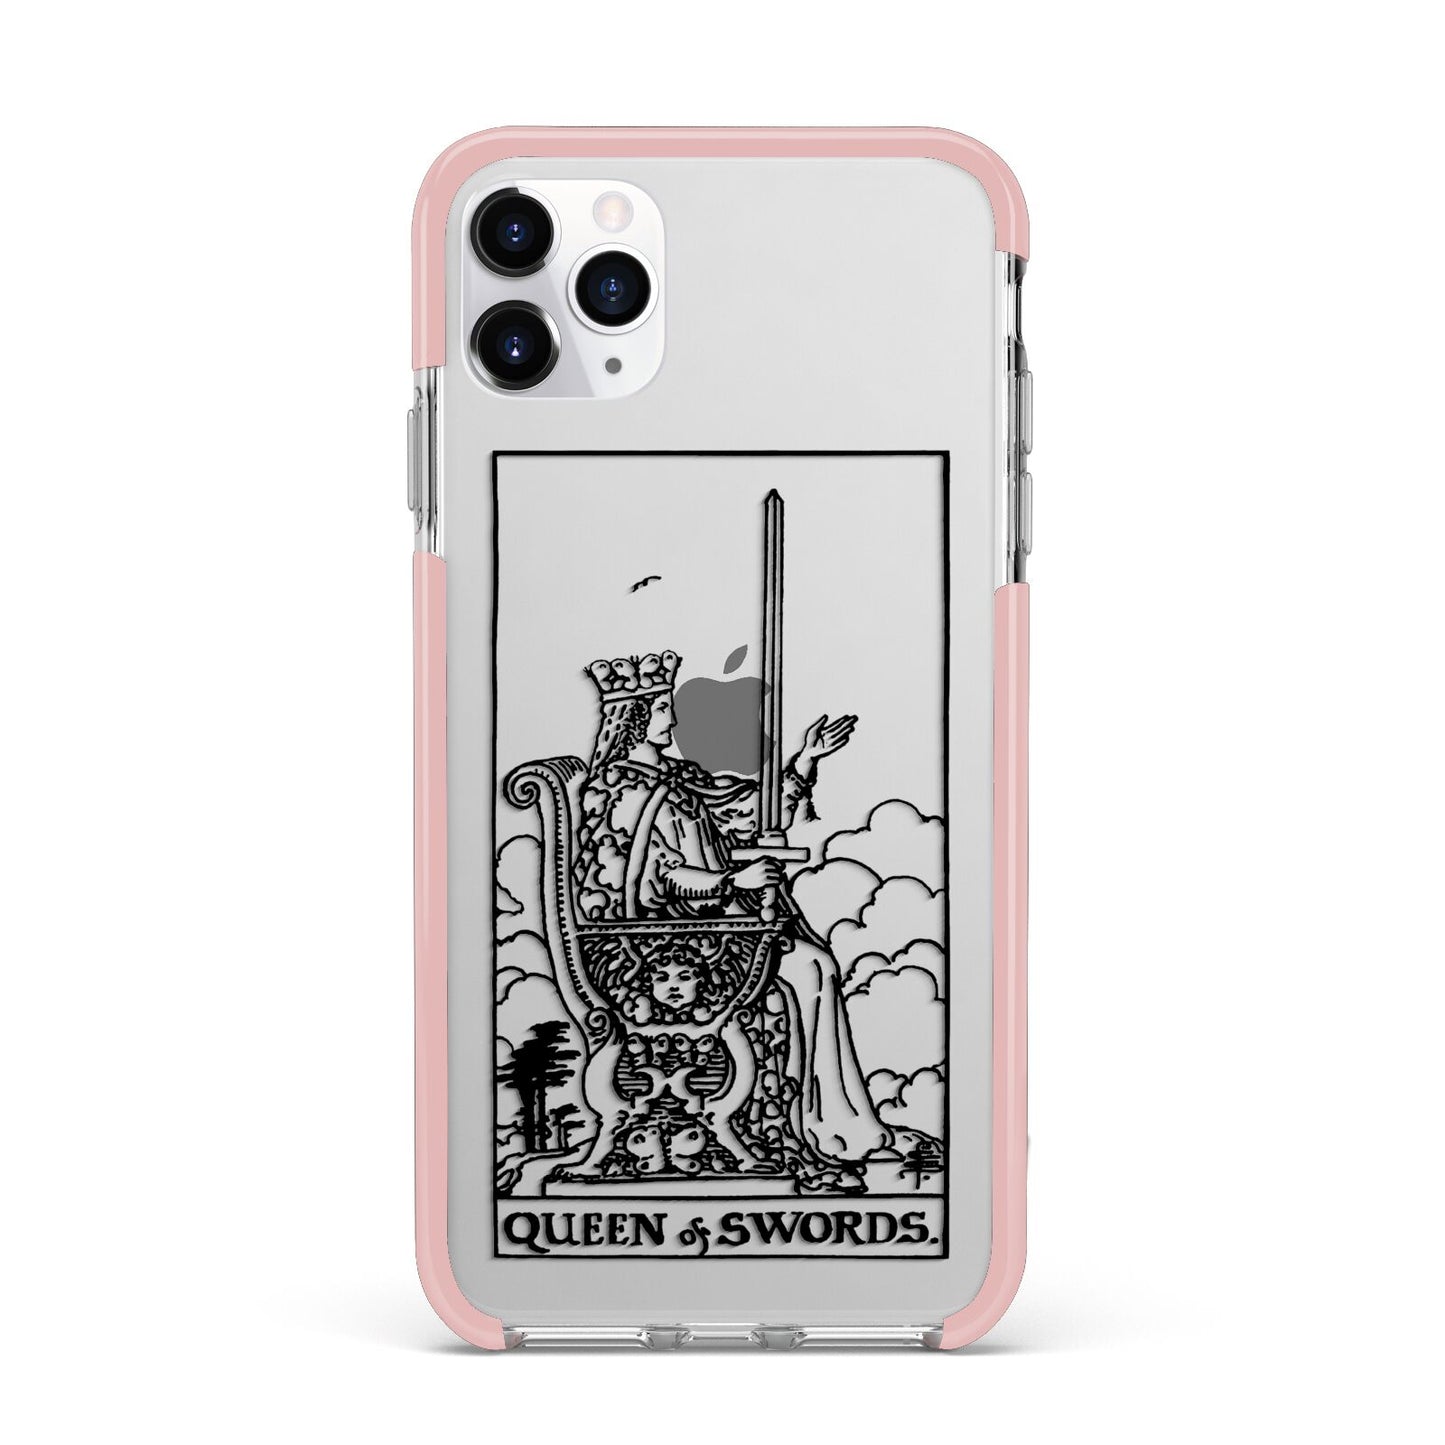 Queen of Swords Monochrome iPhone 11 Pro Max Impact Pink Edge Case